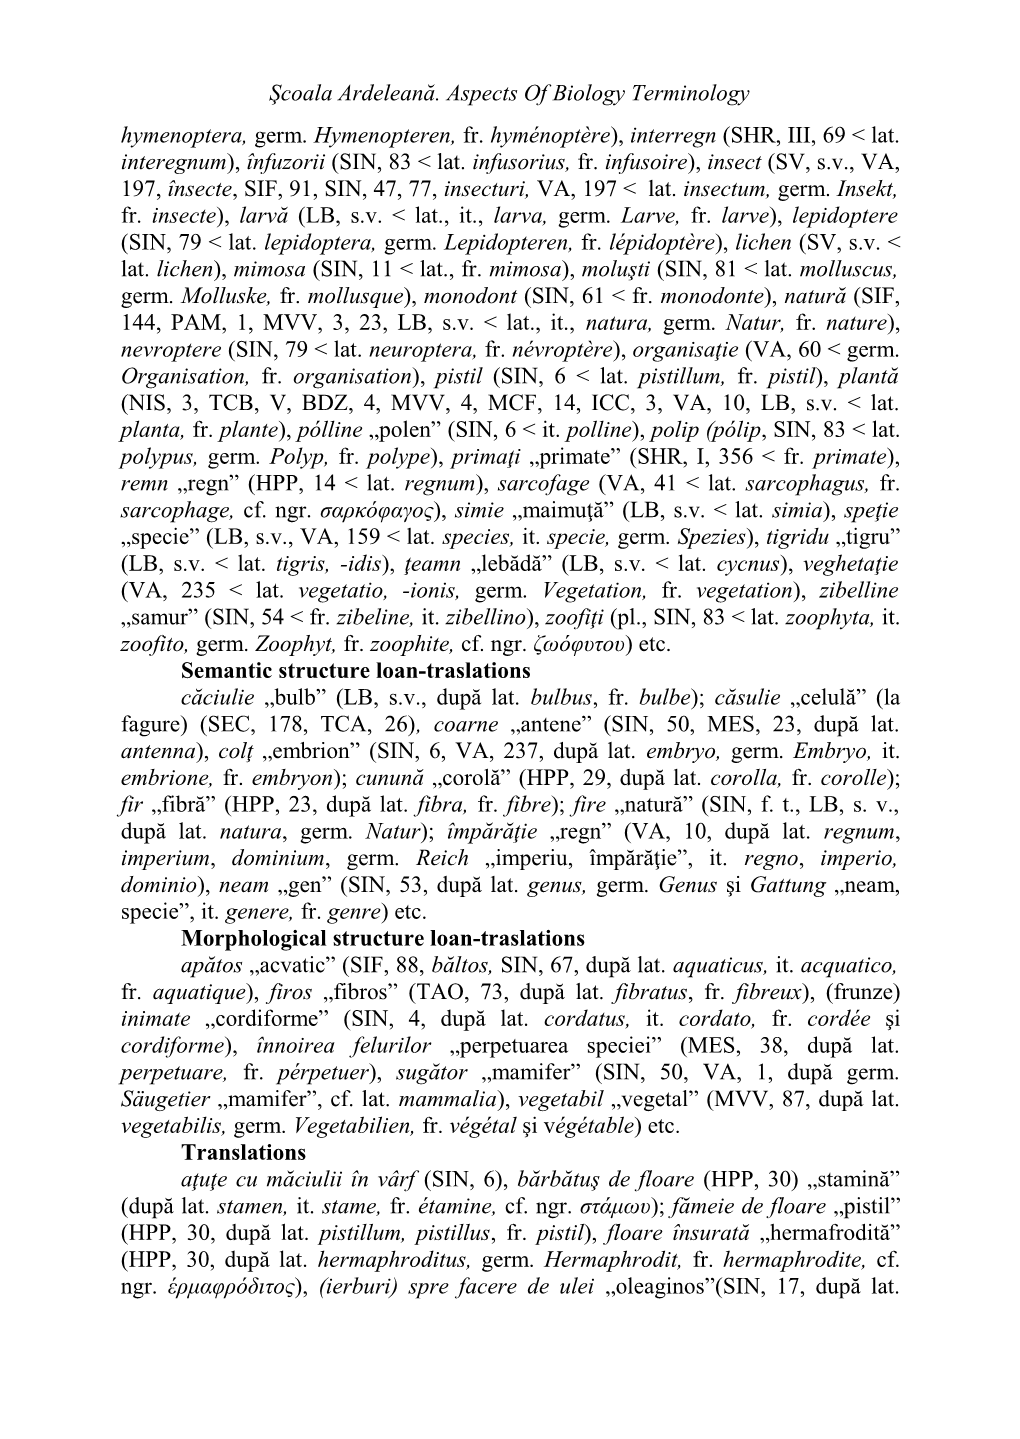 Şcoala Ardeleană. Aspects of Biology Terminology